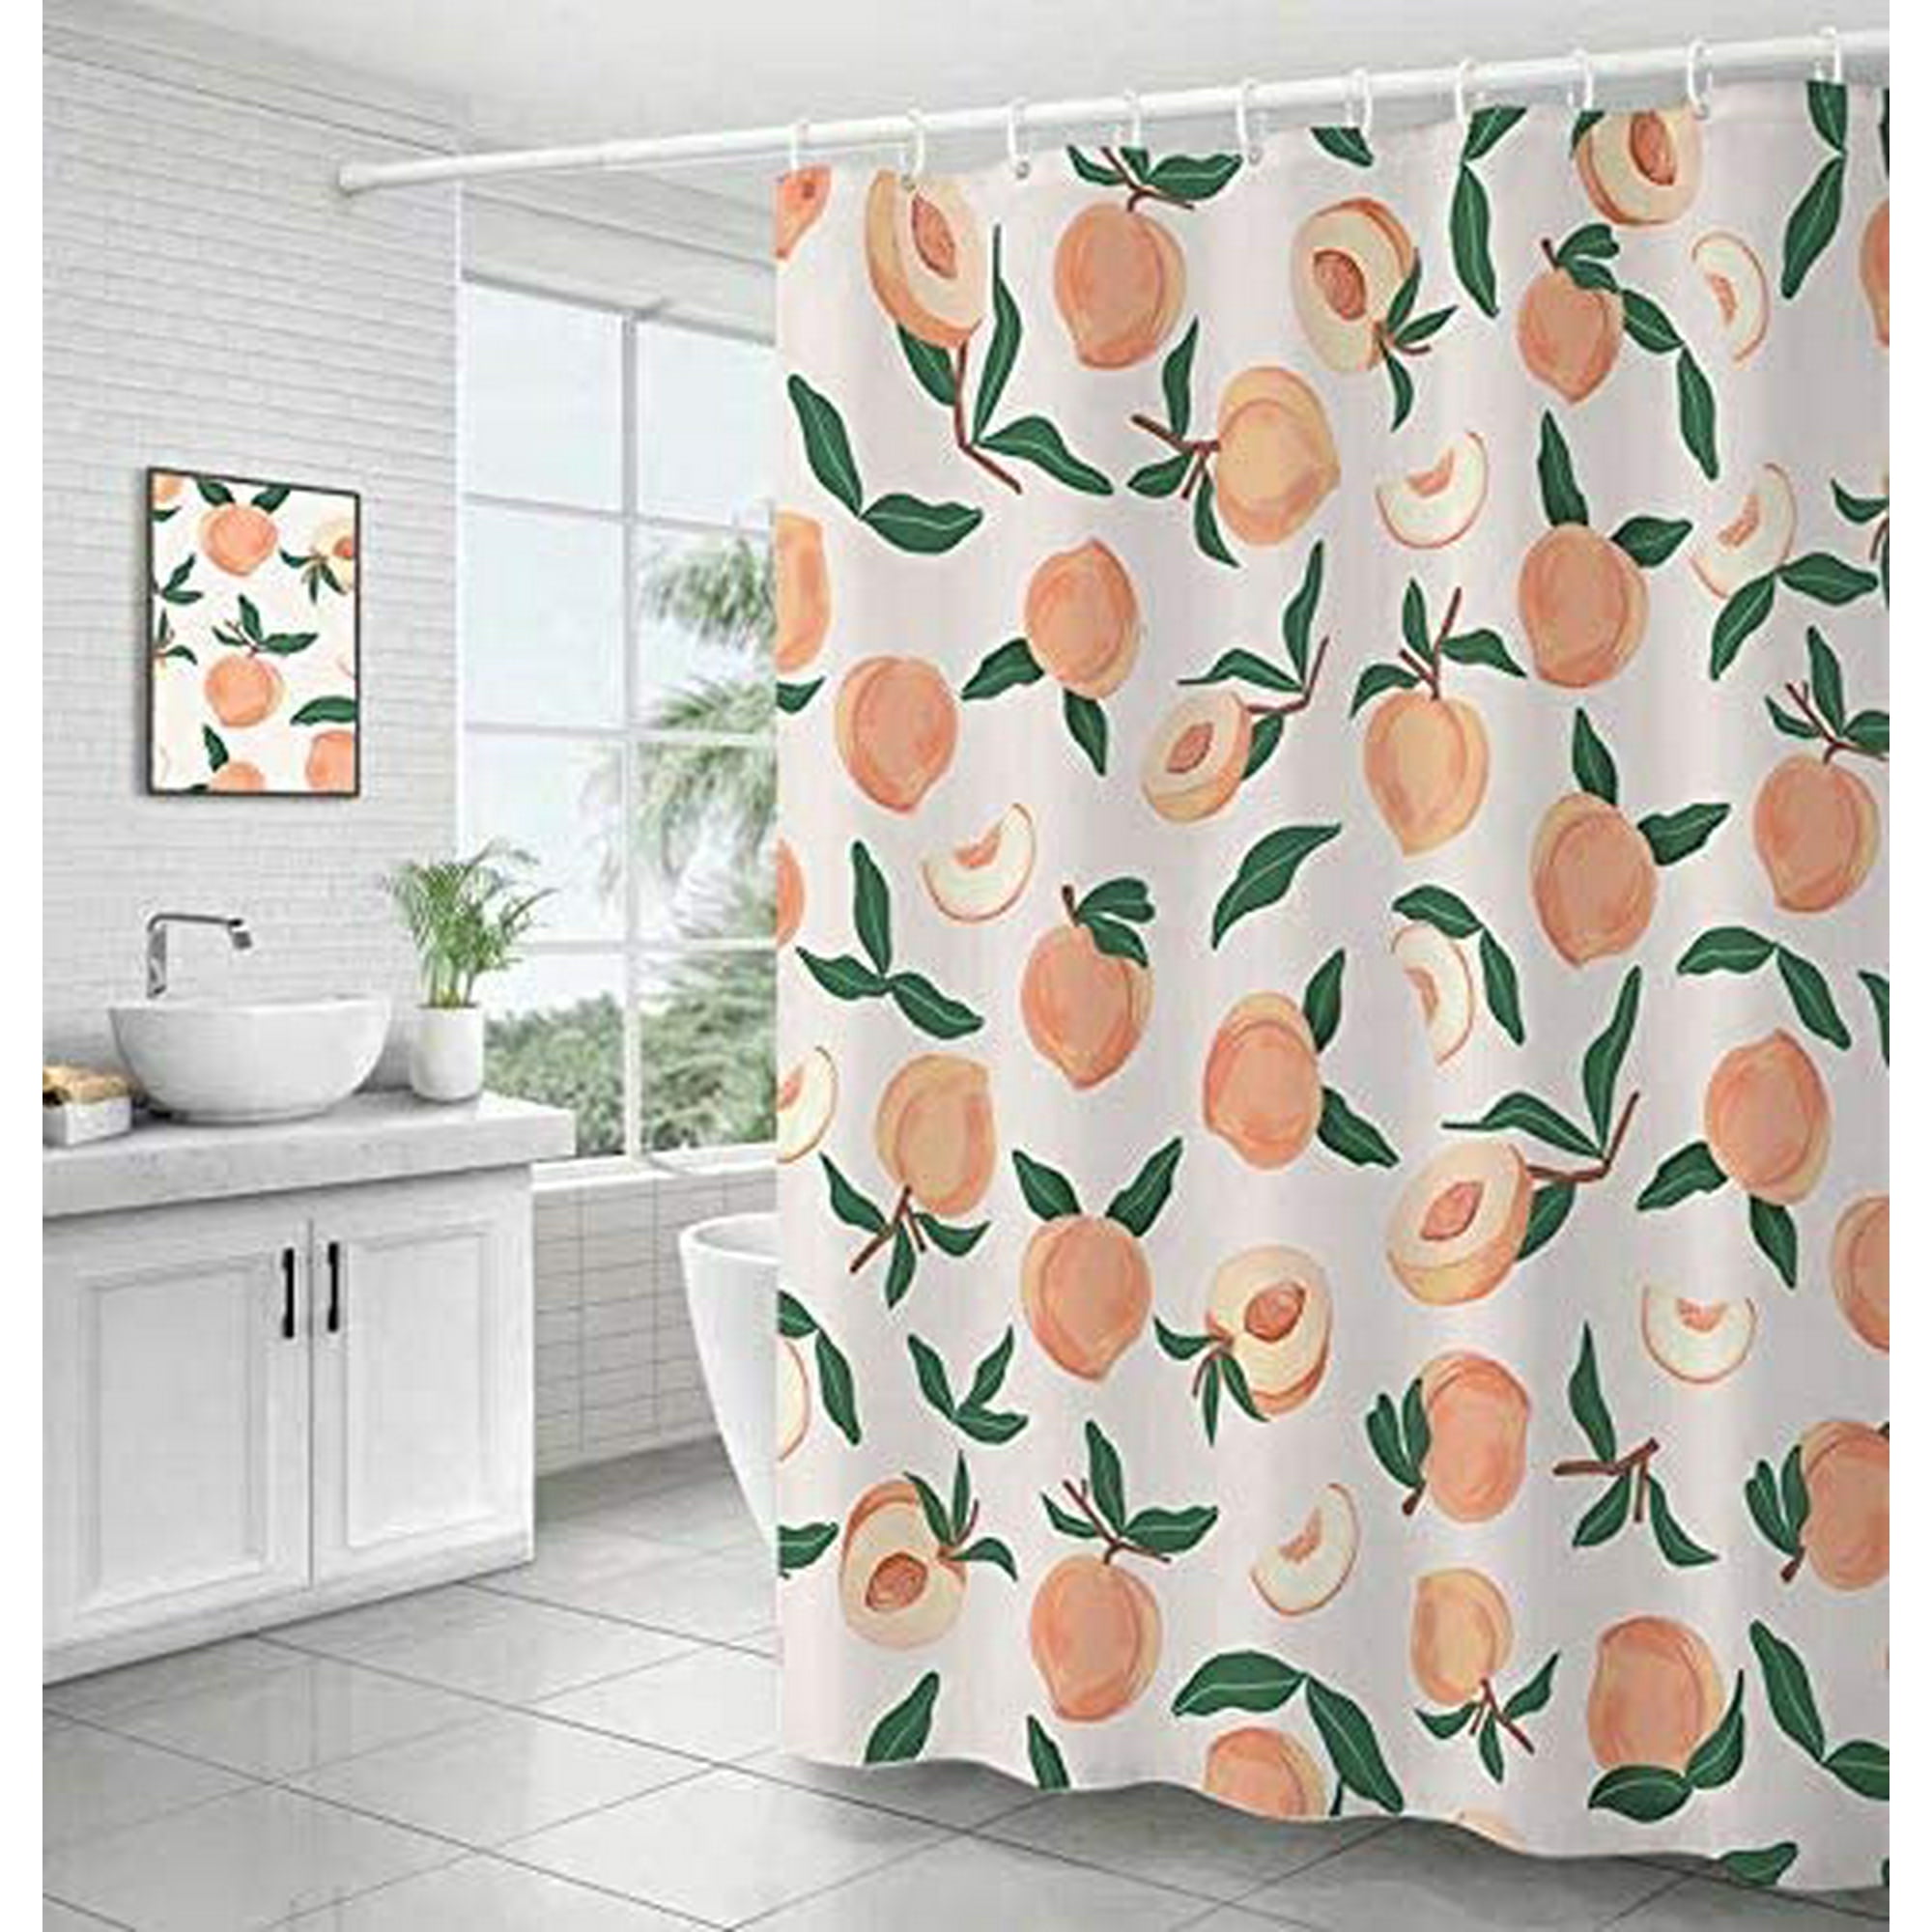 Hearth Works Peach Shower Curtain Set, Peach Bathroom Decor Set